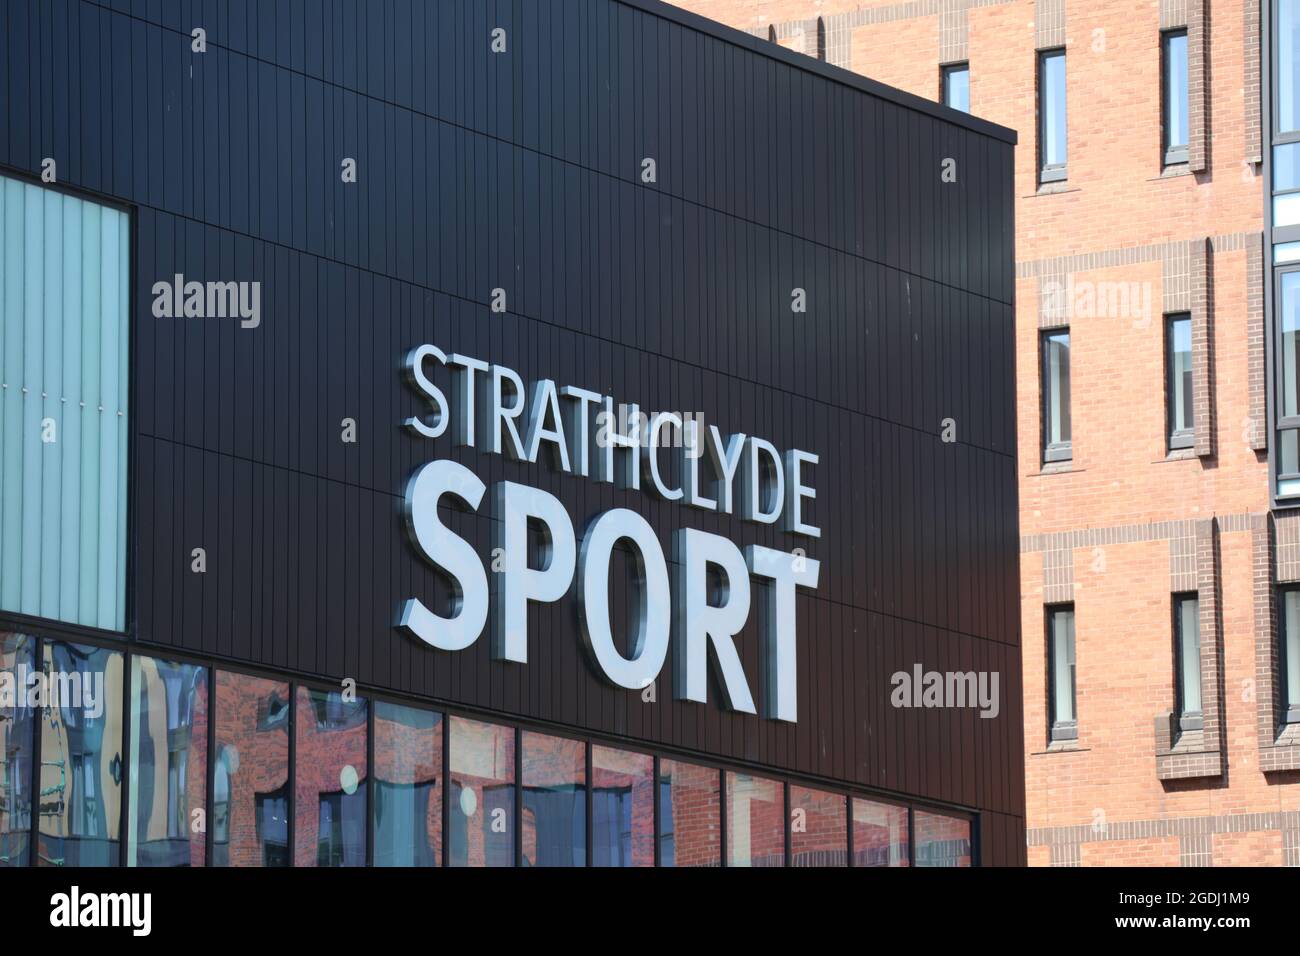 Strathclyde Sport Stock Photo